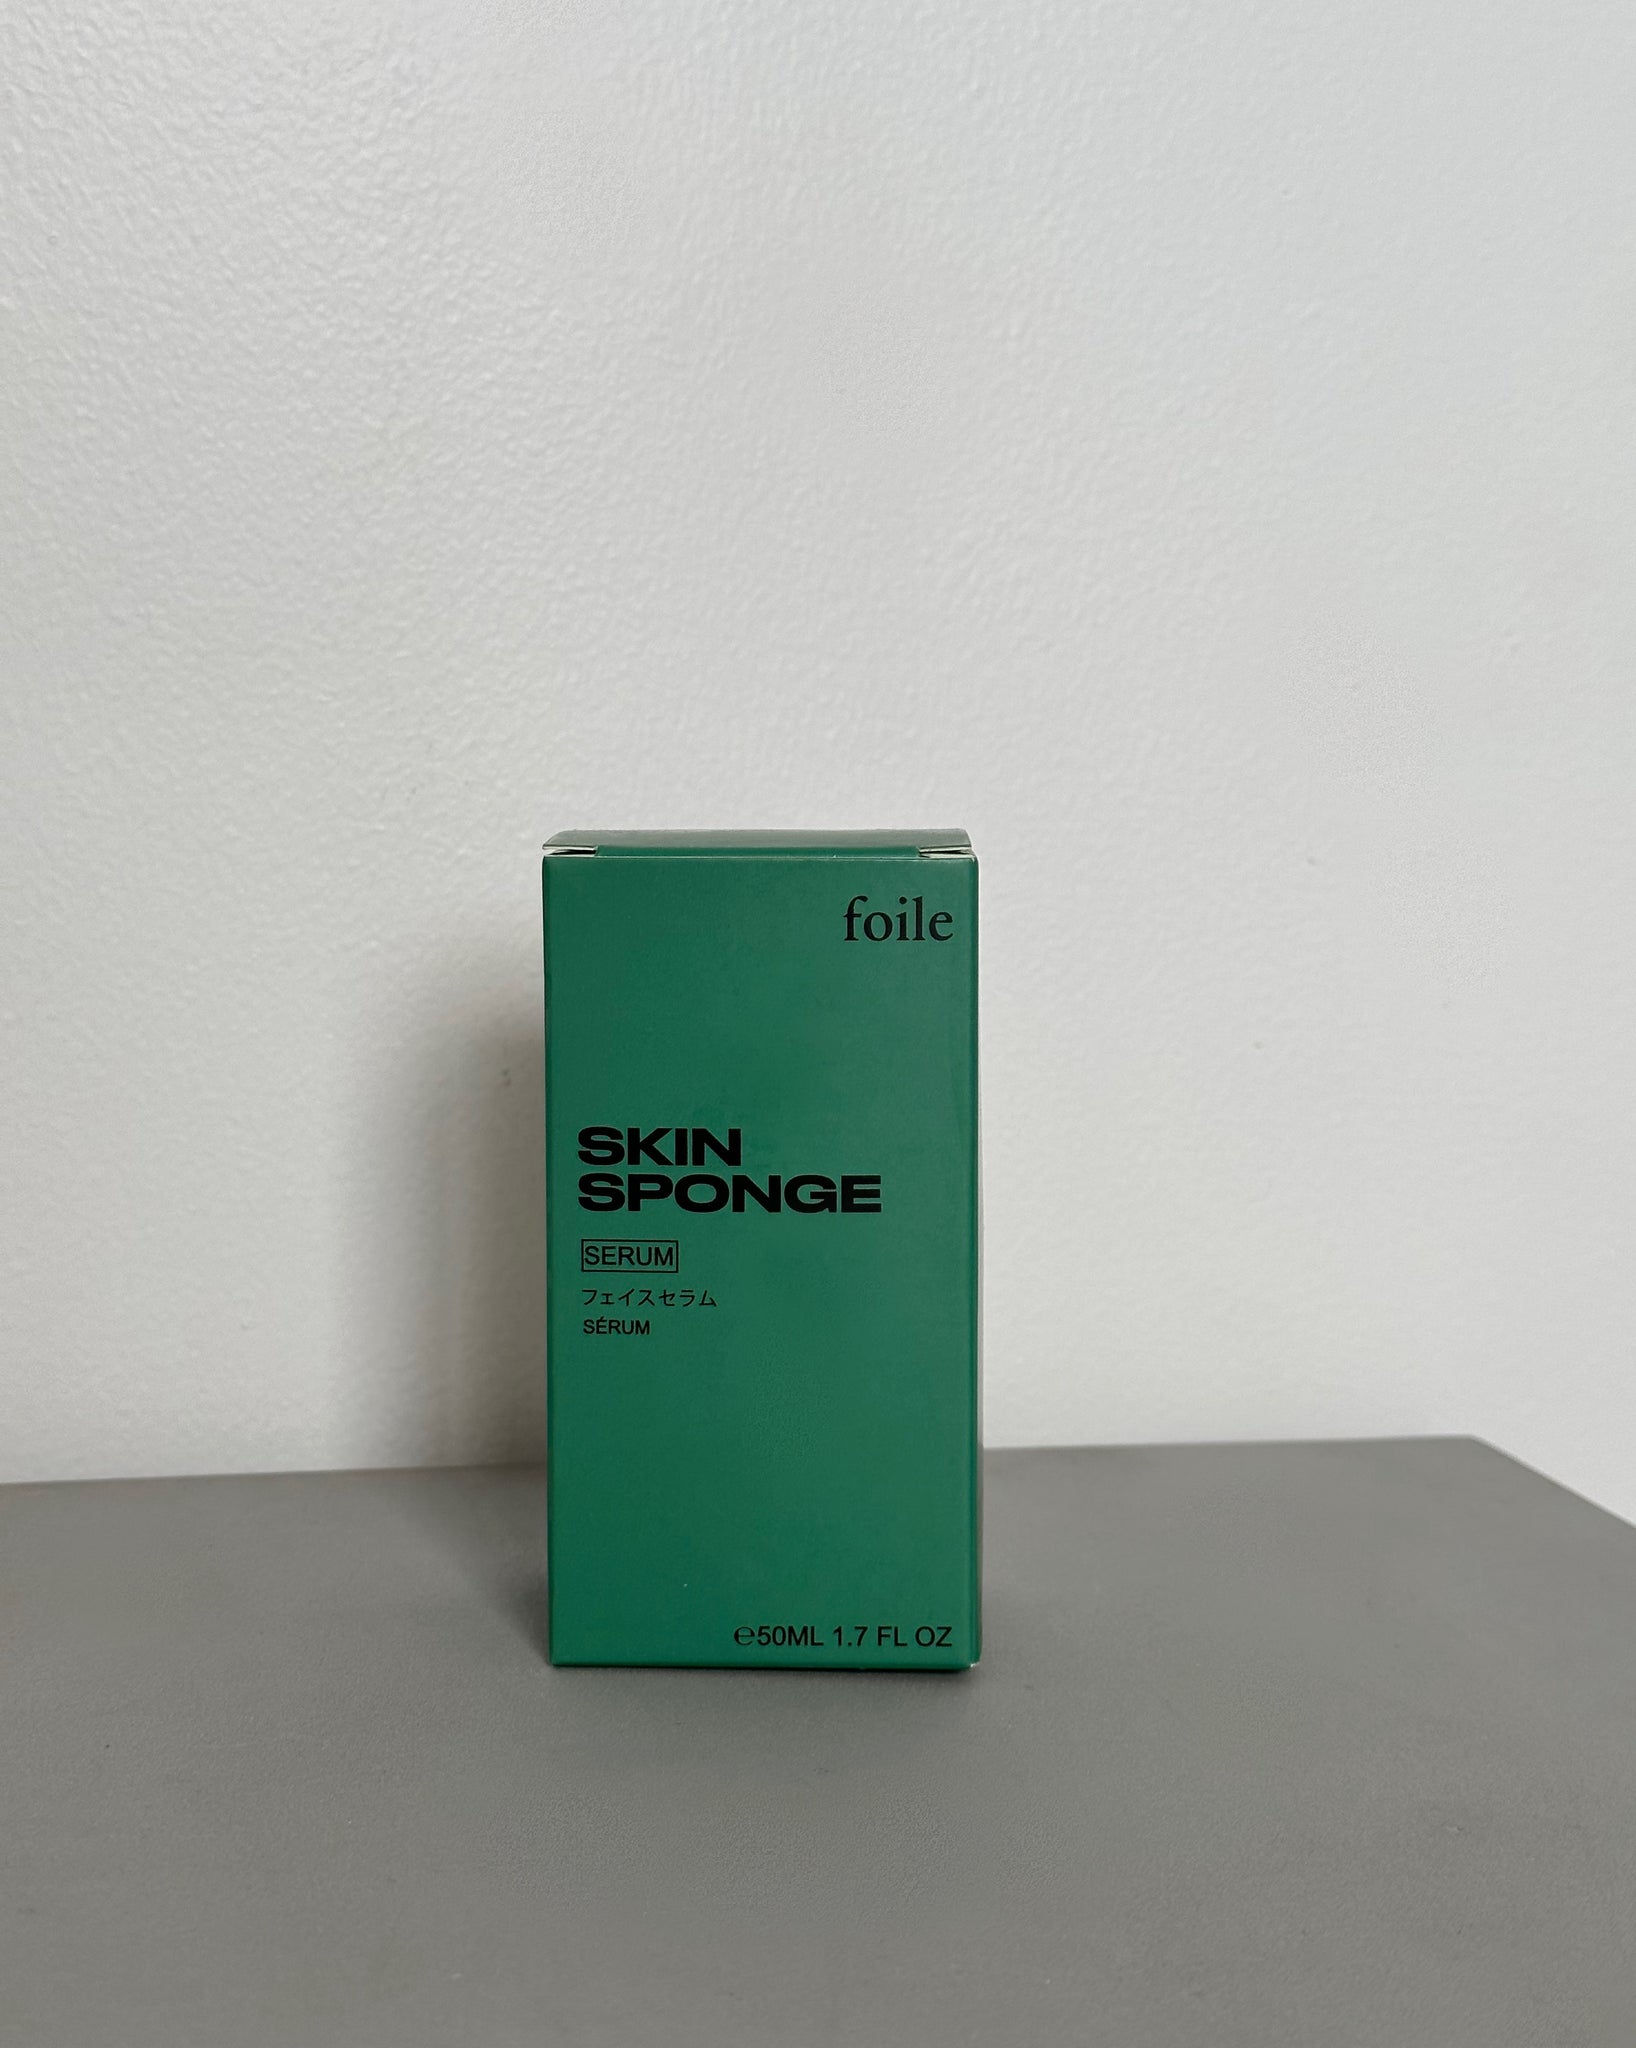 Skin Sponge Serum - That Looks